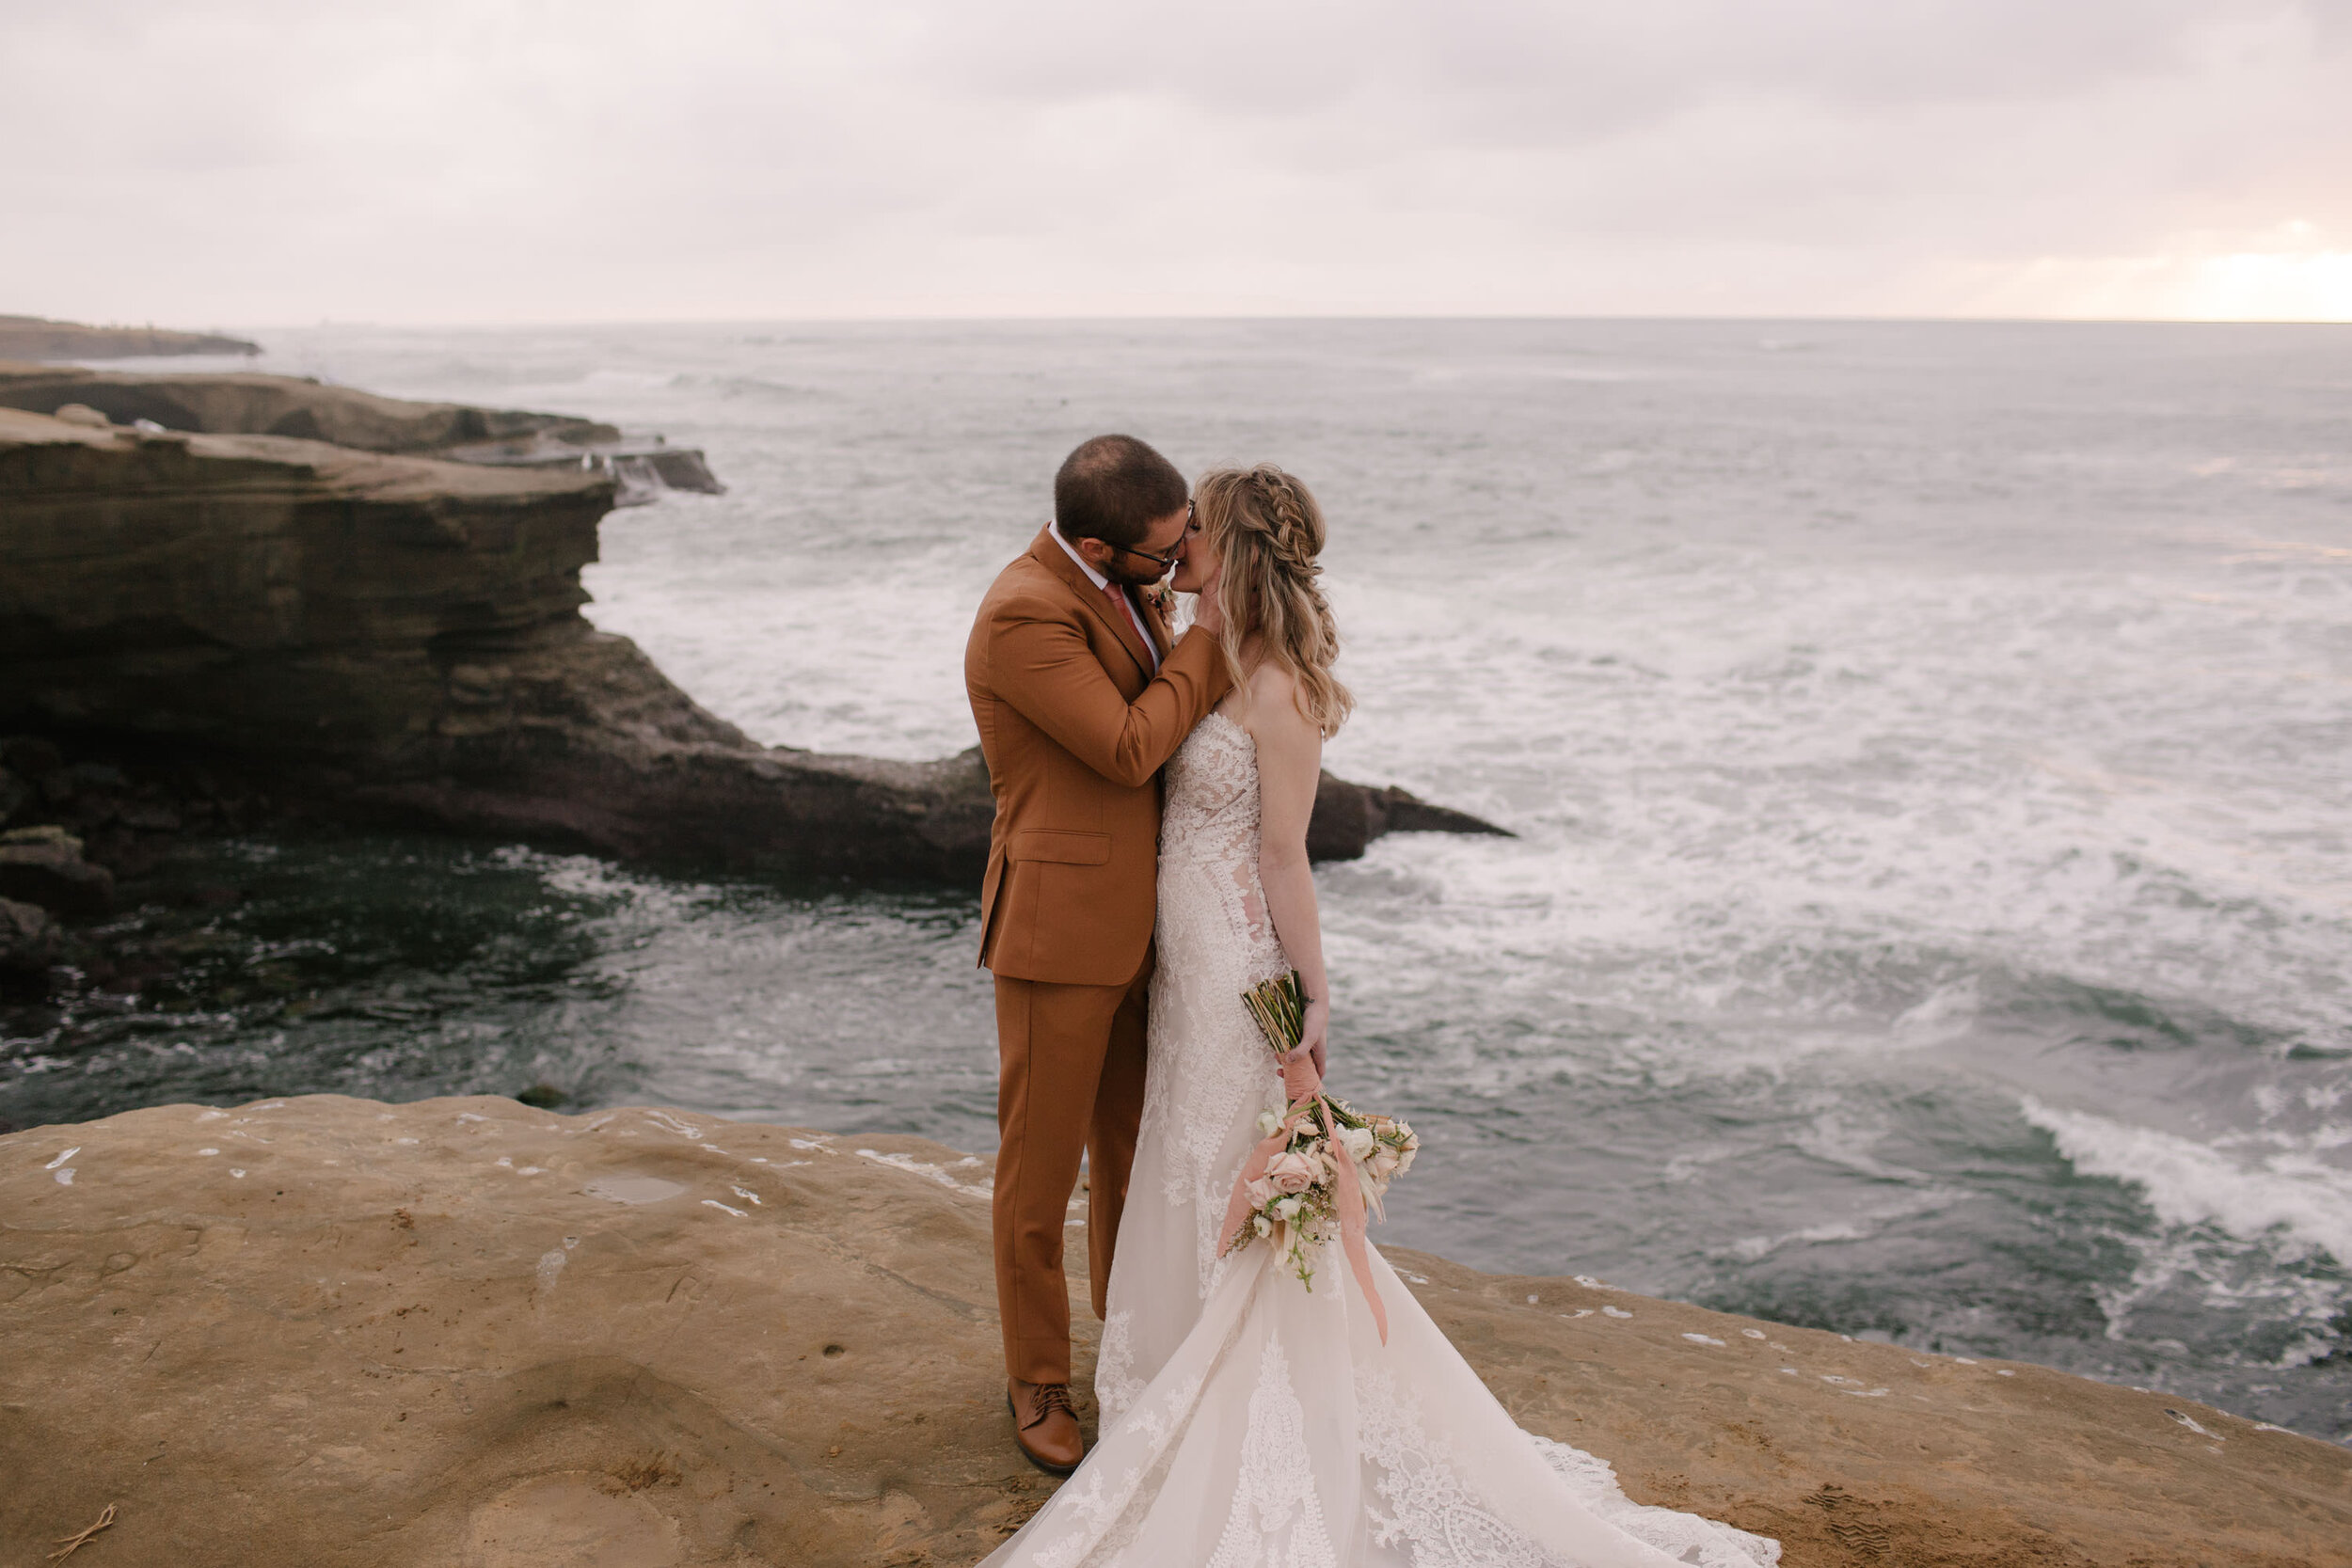 sunset-cliffs-san-diego-boho-styled-wedding-california-elopement-intimate-candid-ocean-beach-socal-photographer-24.jpg